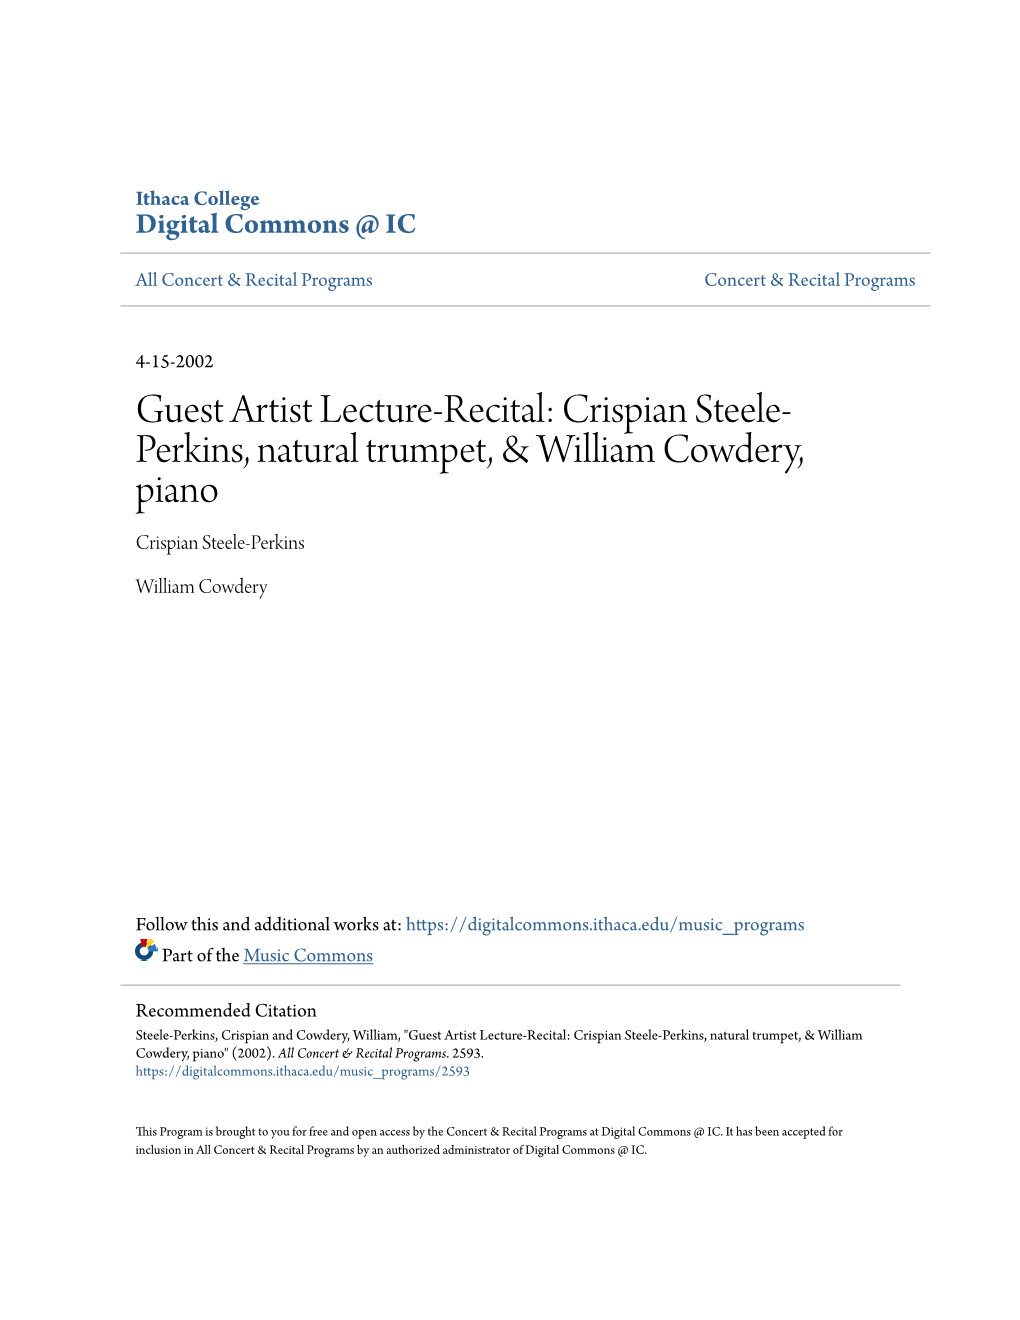 Guest Artist Lecture-Recital: Crispian Steele-Perkins, Natural Trumpet, & William Cowdery, Piano" (2002)